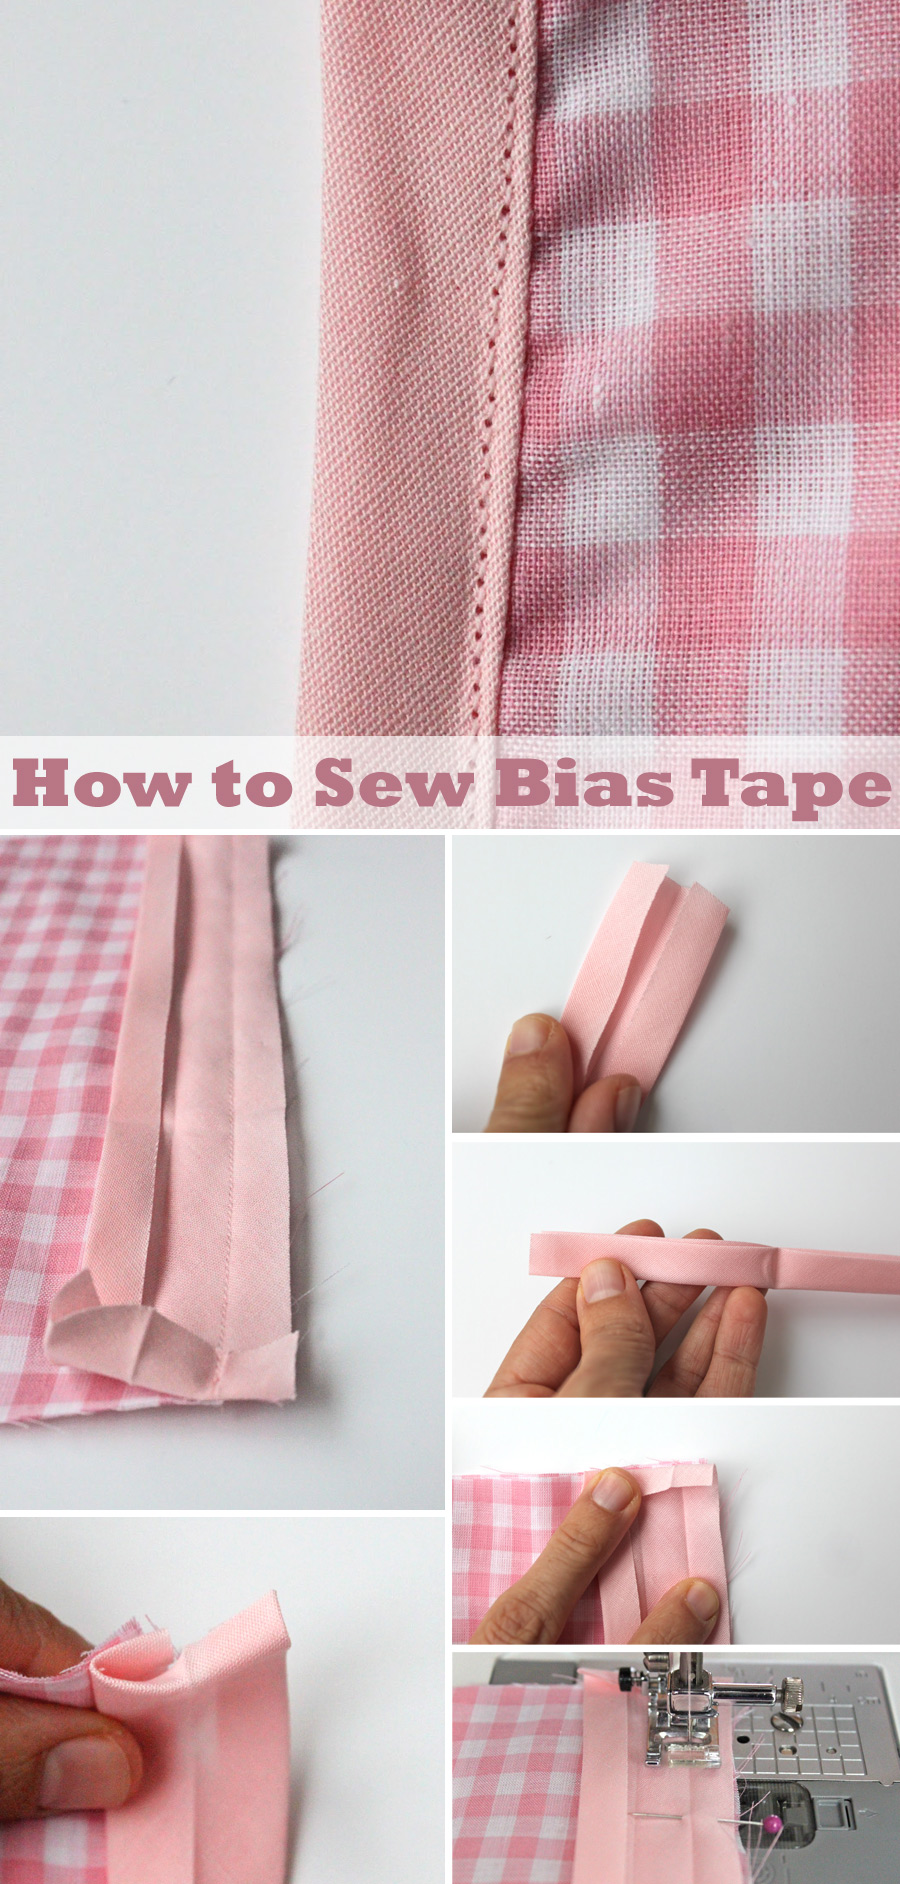 How to Sew Bias Tape - Tutorial